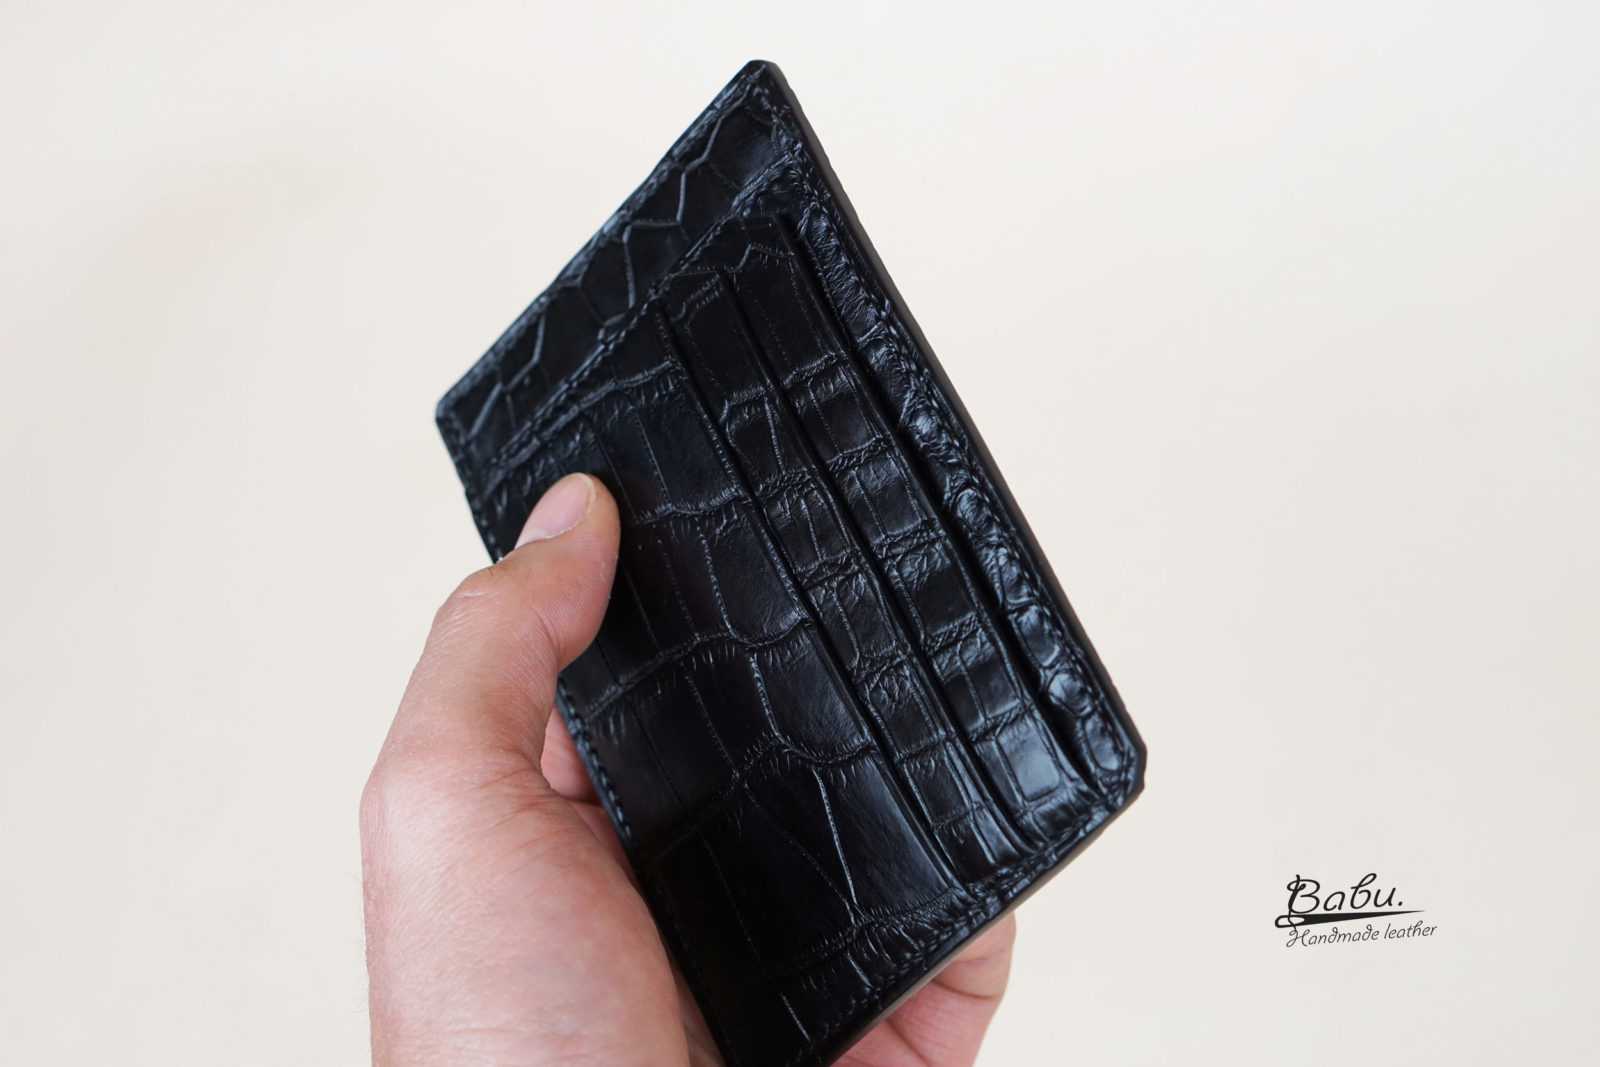 Genuine Alligator Black Card Case Credit Card Holder Leather Handmade in USA - Optional Personalized Monogram